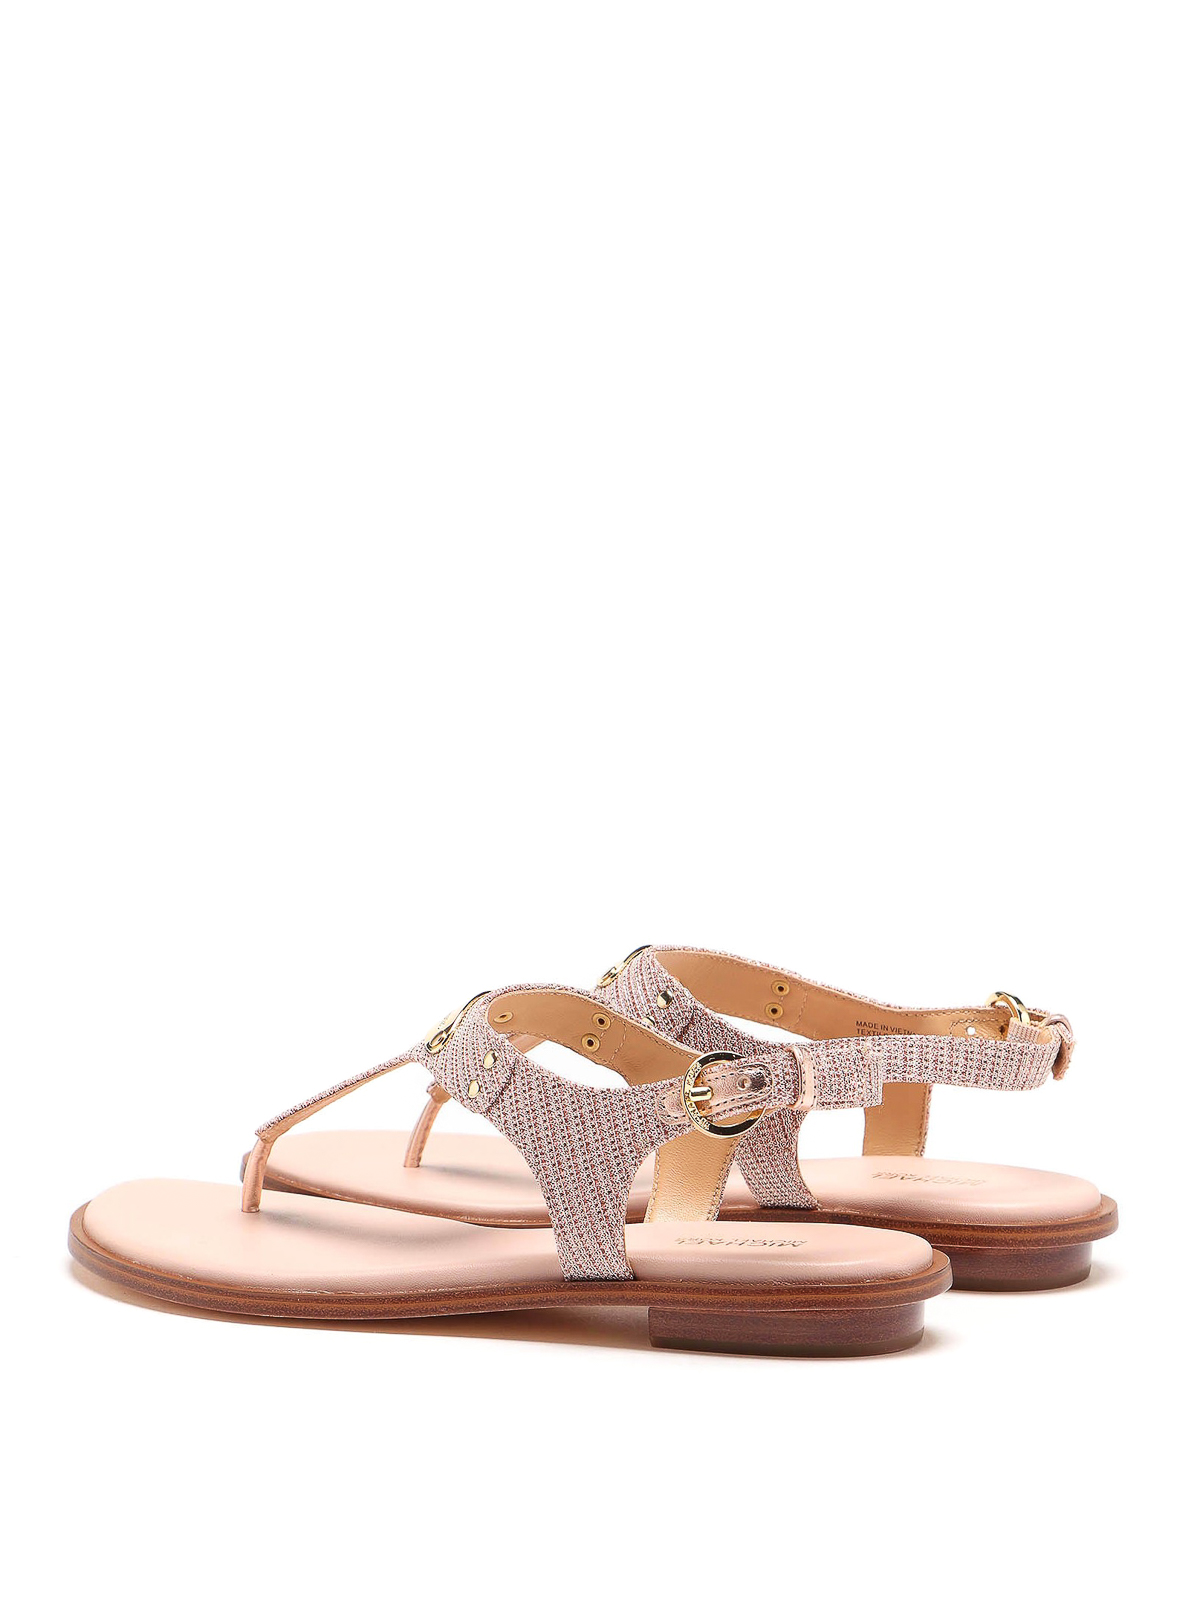 Sandals Michael Kors - MK plaque pink thong sandals - 40S0MKFA3D674